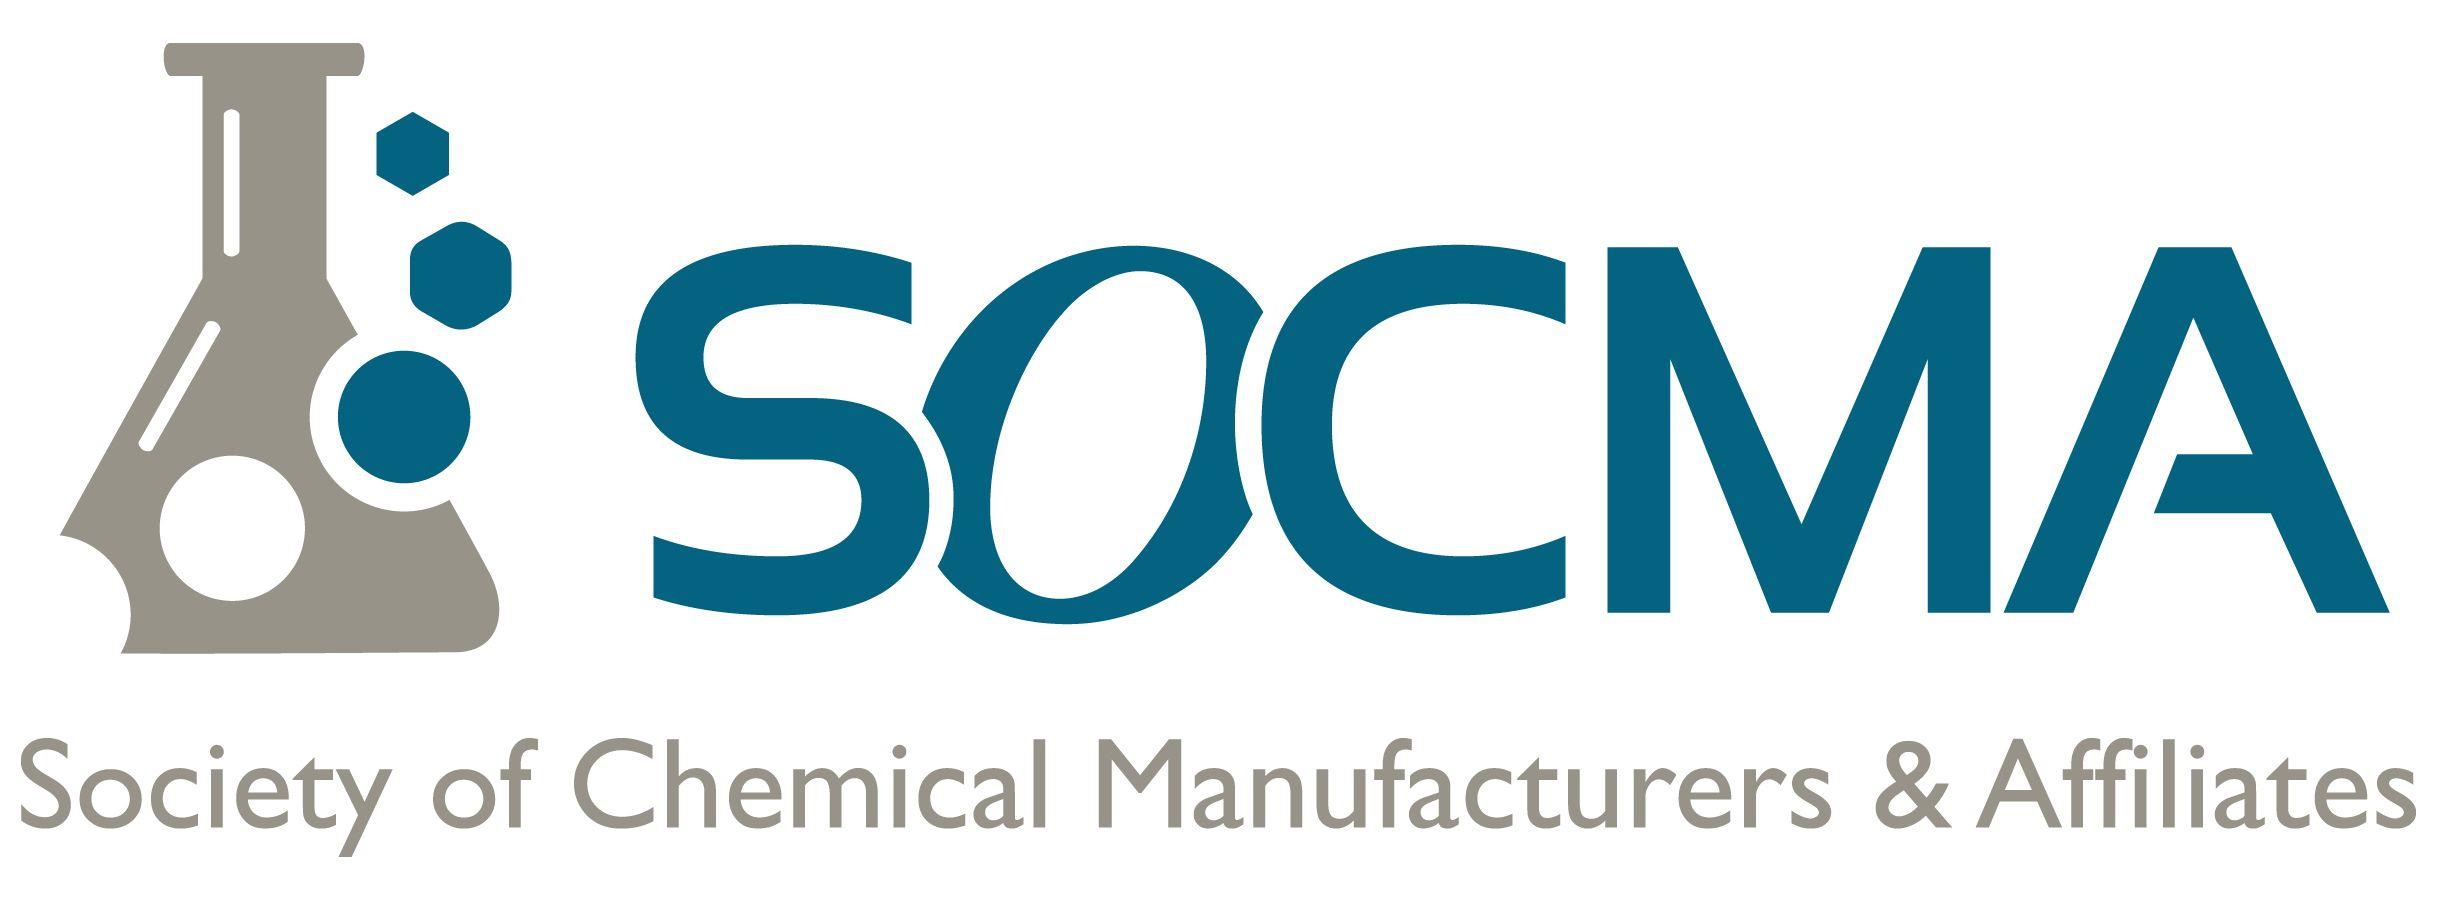 Chemical Company Logo - Chemicals Knowledge Hub